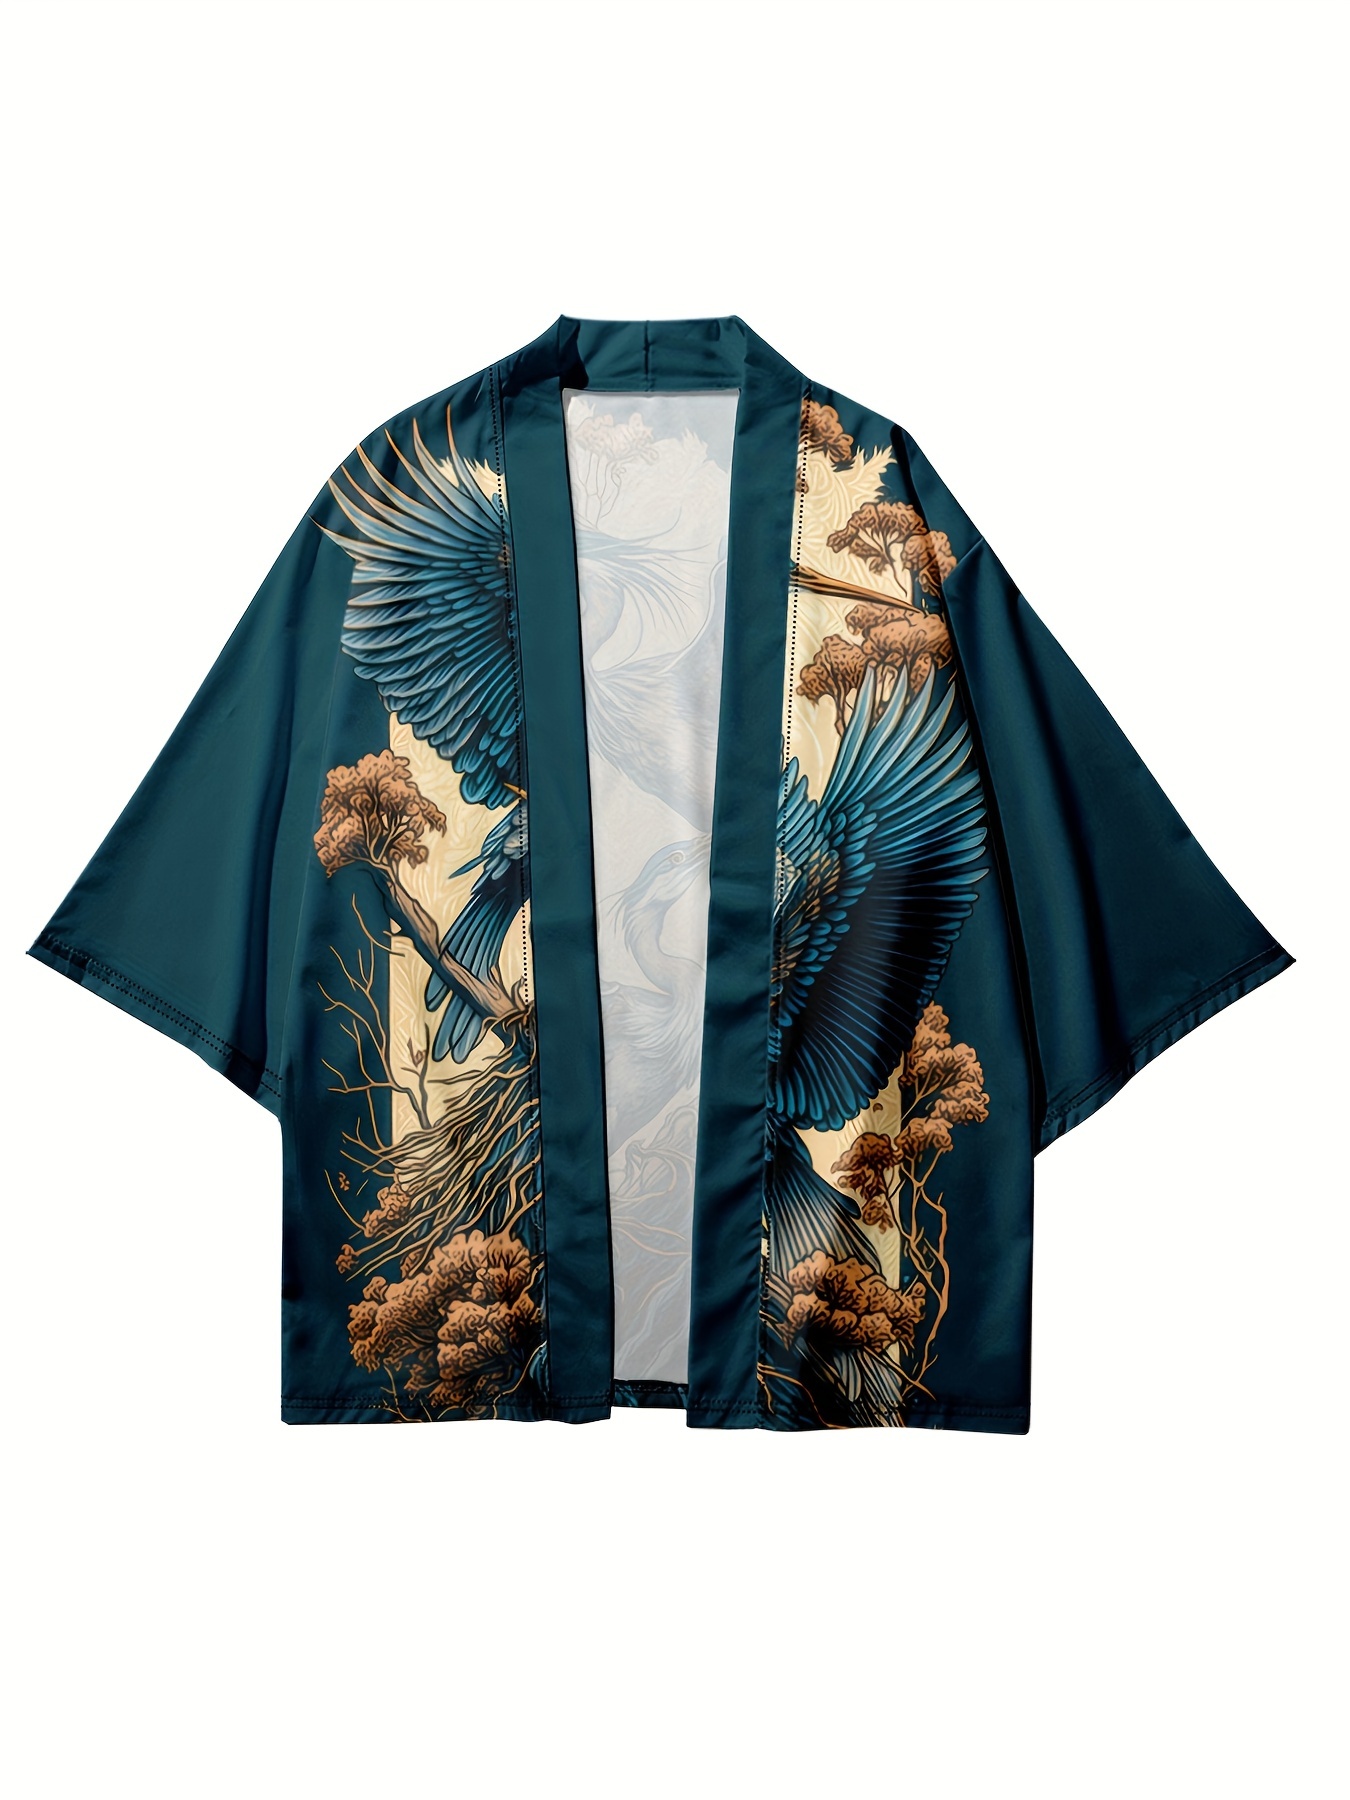 Kimono Men Japanese Kimono Traditional Male Streetwear Costume